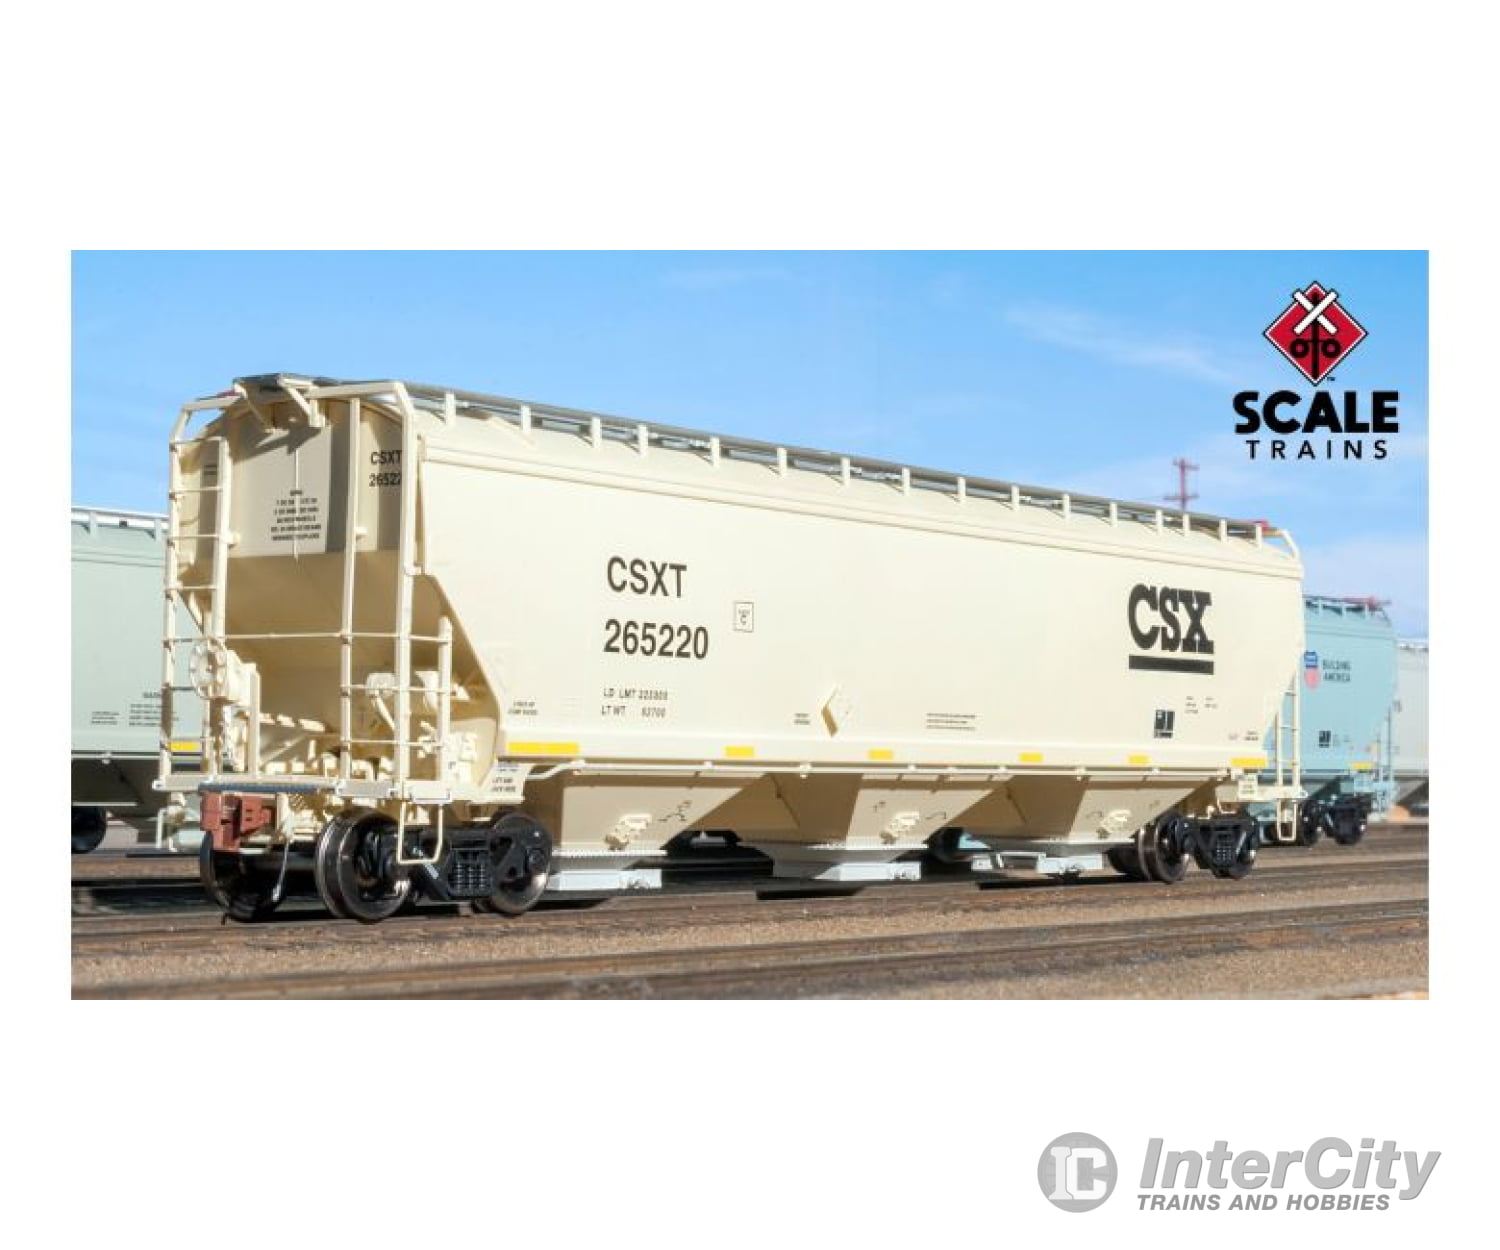 Scale Trains Sxt30801 Rivet Counter Ho Gunderson Covered Hopper Csx Rd#265212 Freight Cars